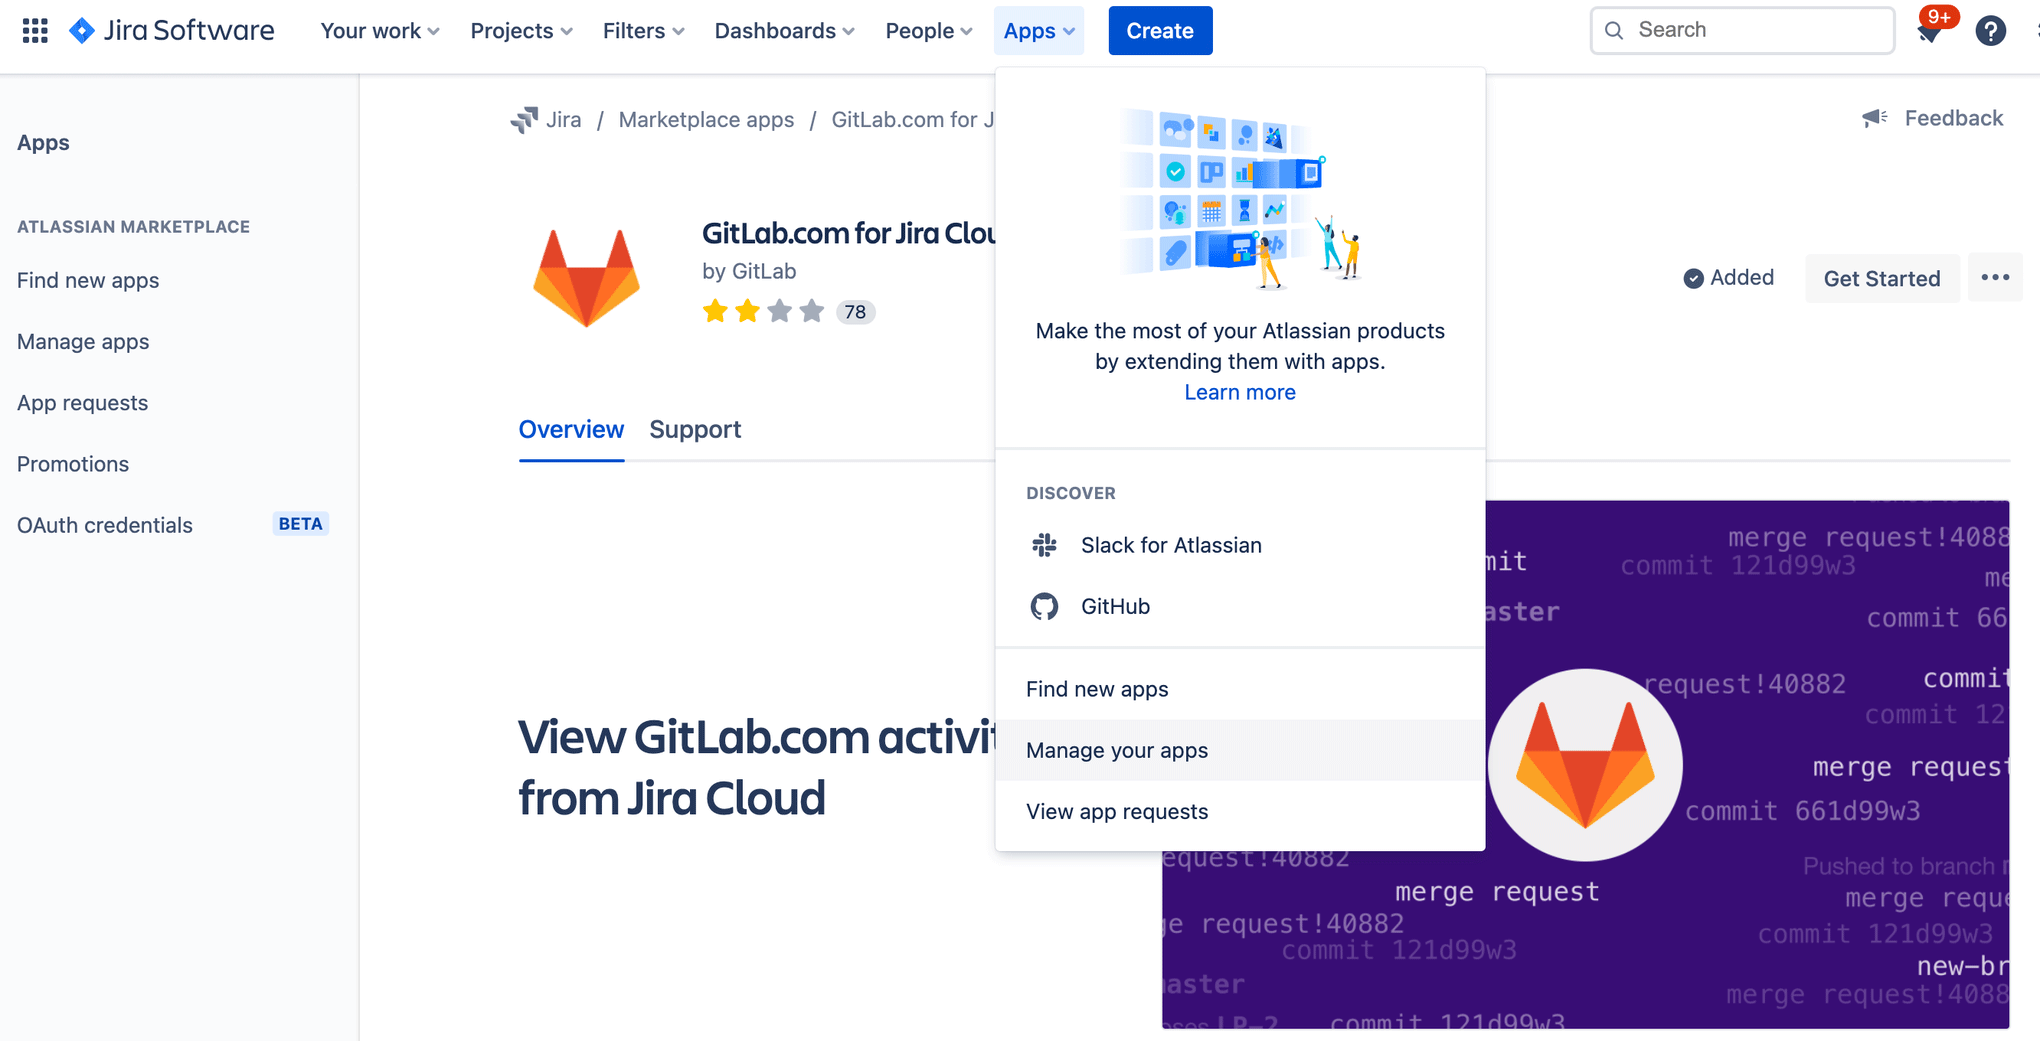 Gitlab app modal in Jira software with dropdown menu